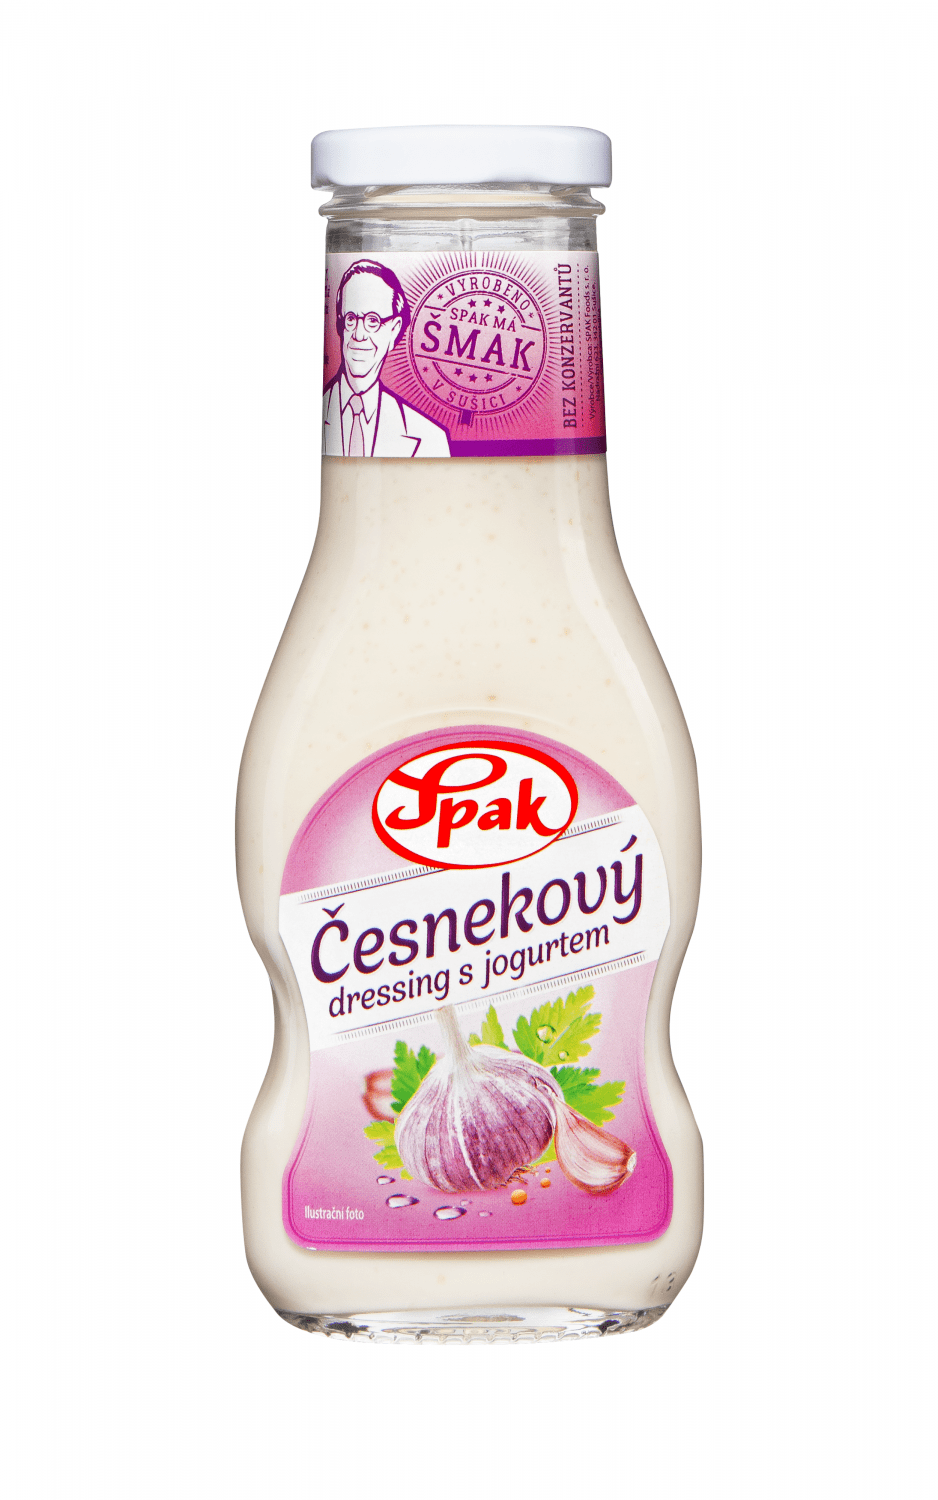 Cesnekovy-dressing-s-jogurtem-250-ml